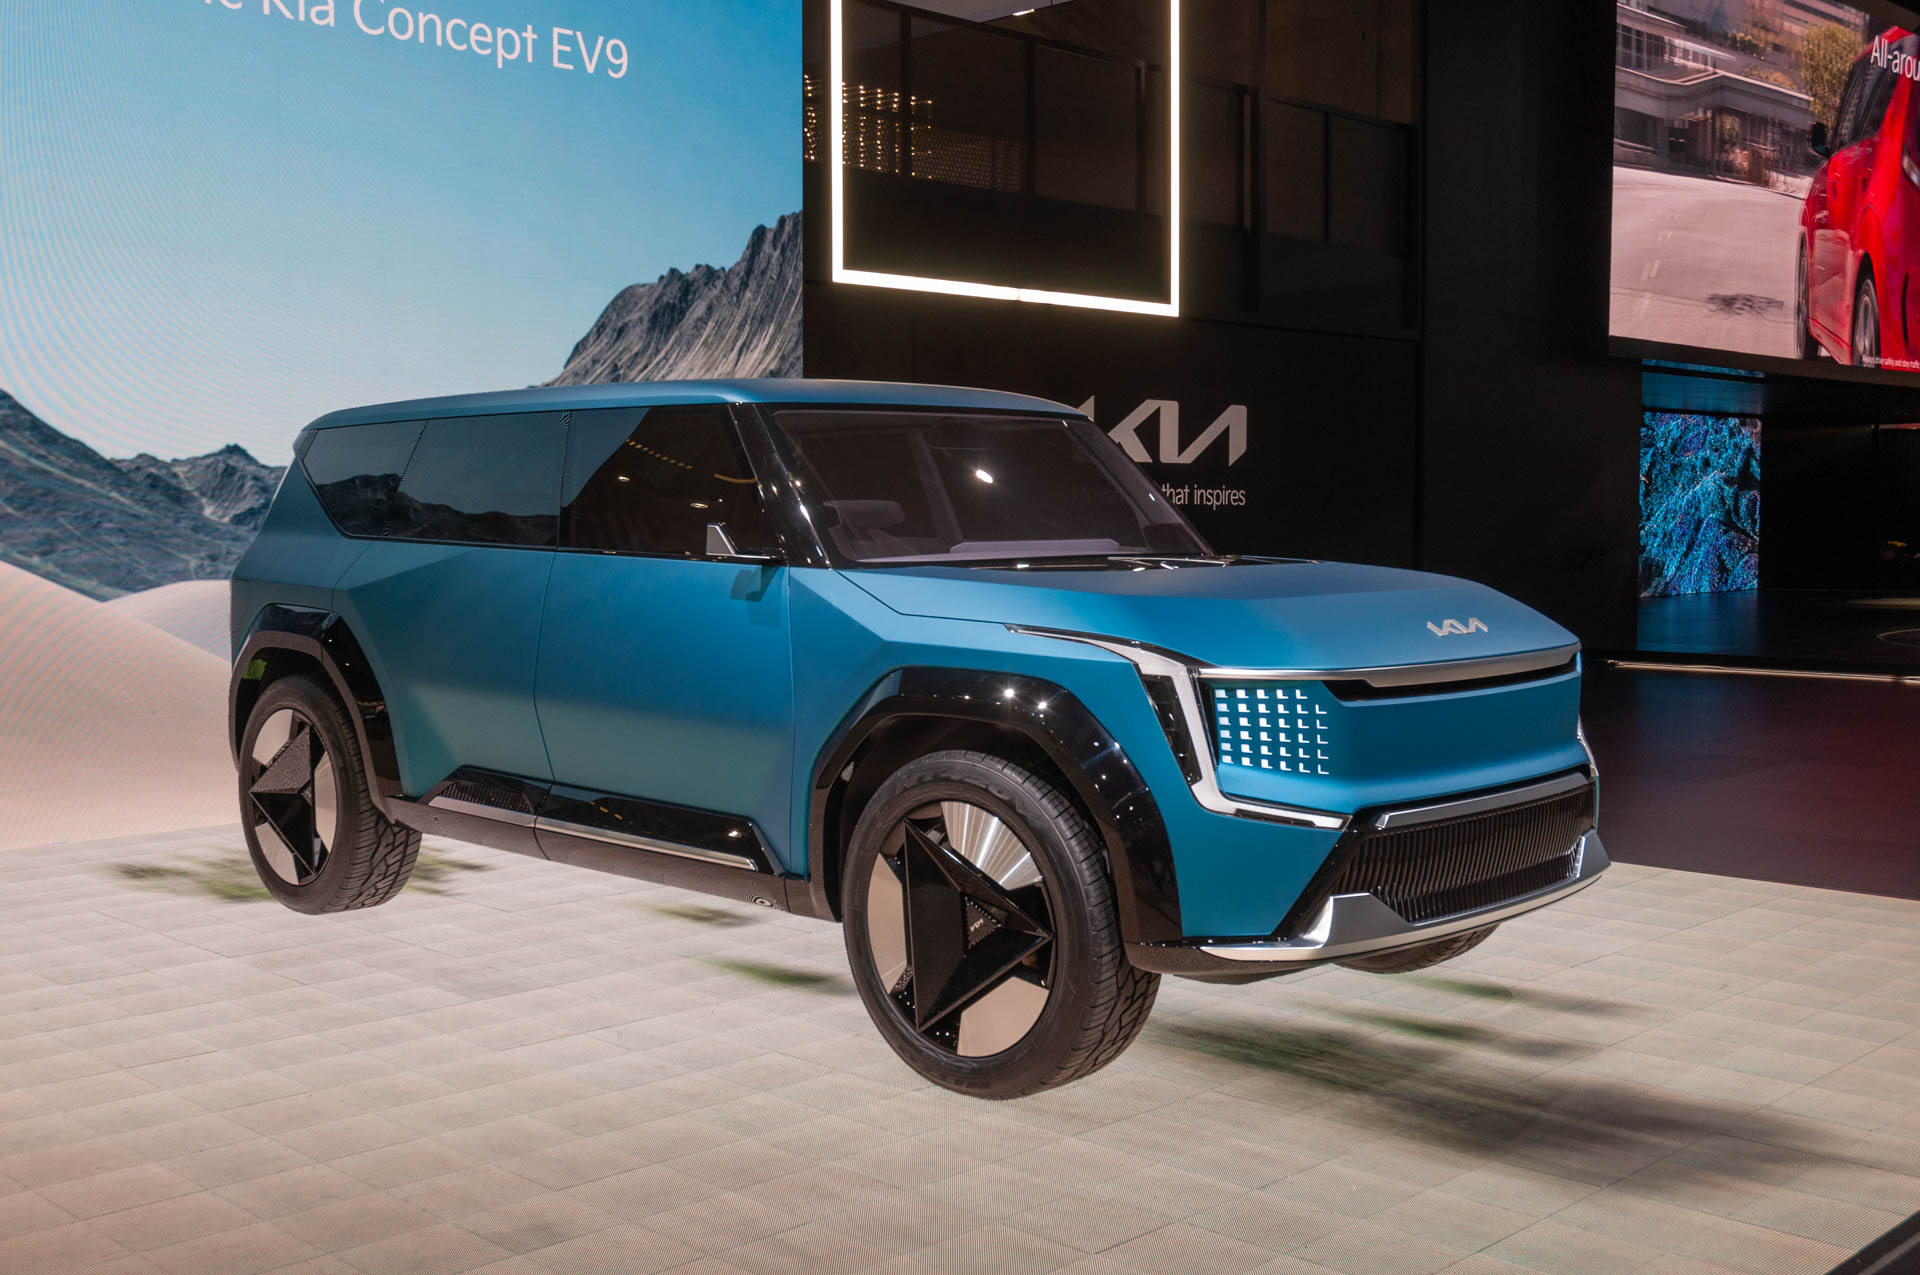 Kia EV9: Concept electric SUV is full of ideas for production-bound modelKia EV9: Concept electric SUV is full of ideas for production-bound model